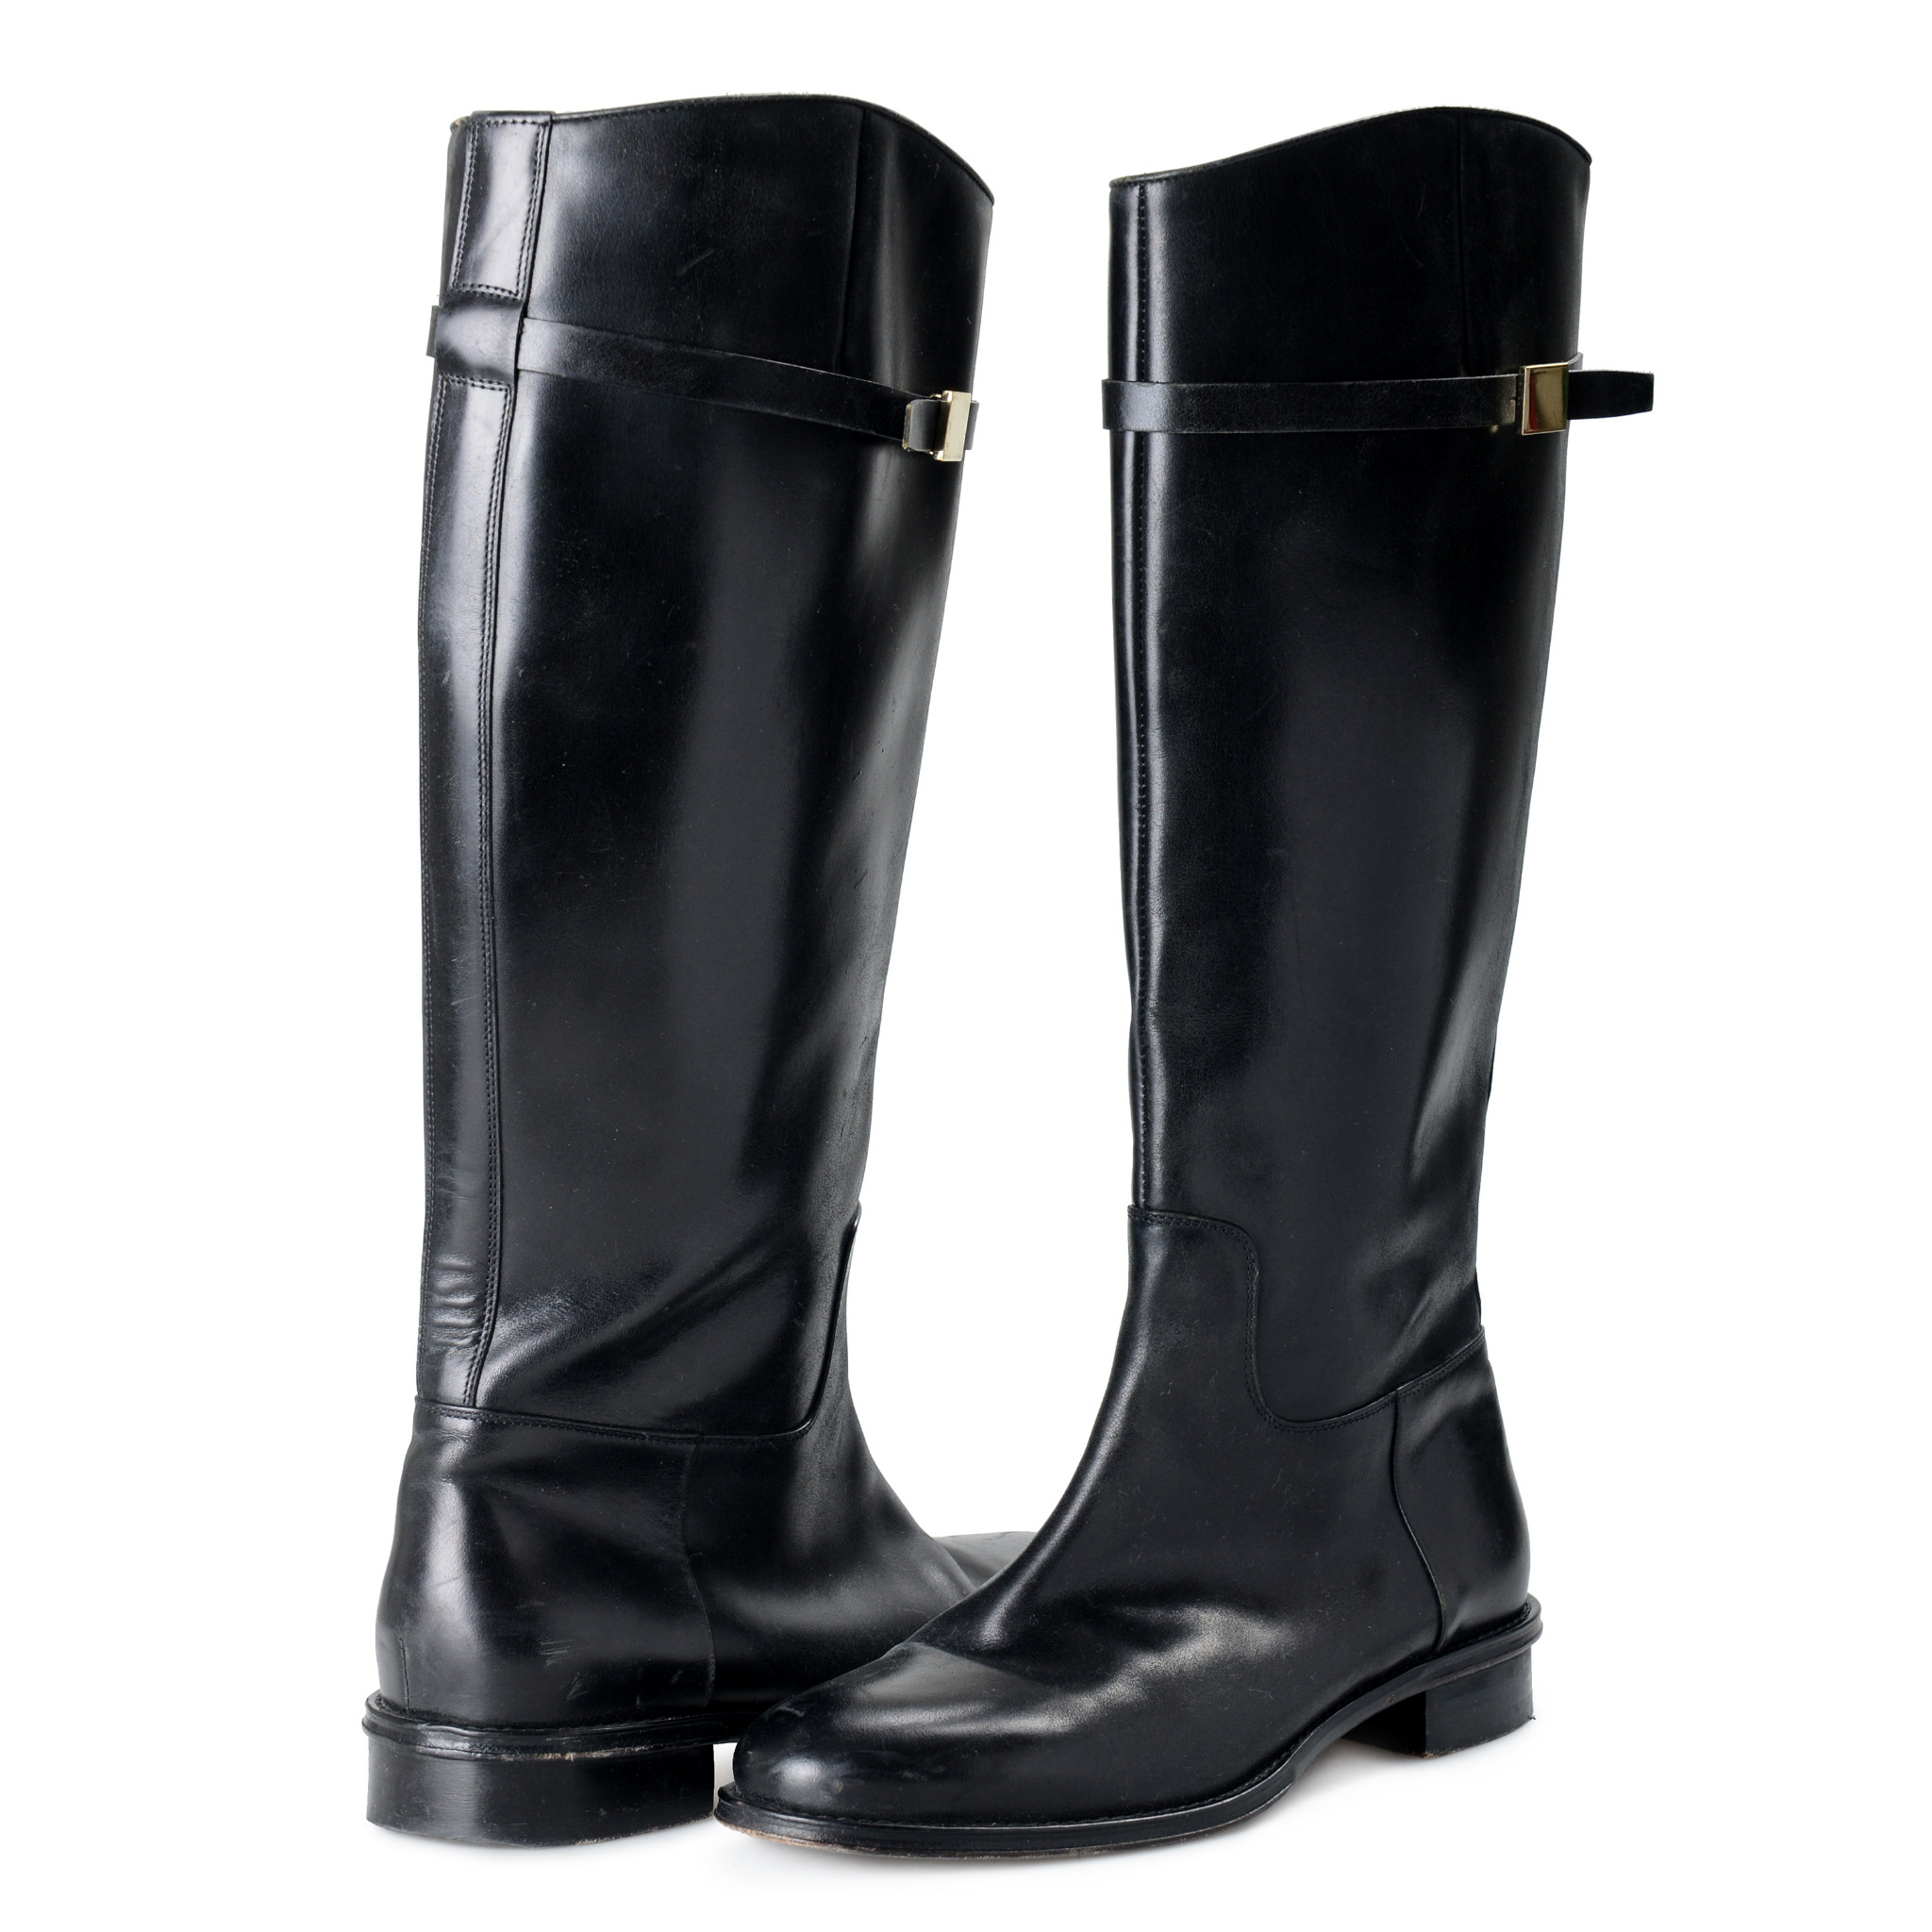 Hugo Boss Women's Black Leather Knee High Boots Shoes US 11 IT 41 | eBay